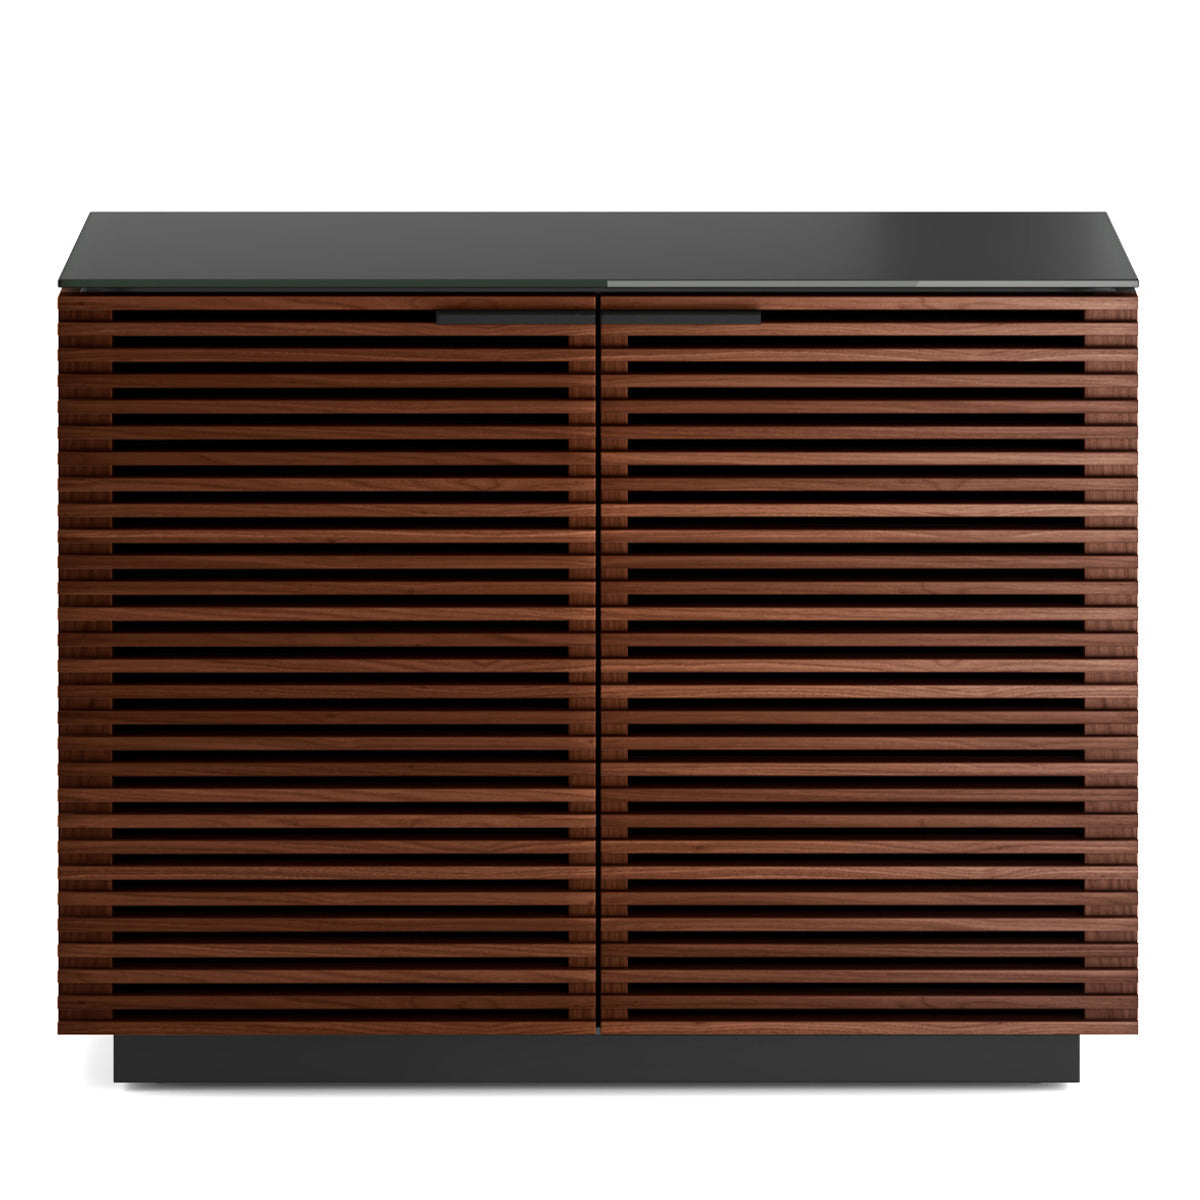 BDI Corridor 8108 2-Door Storage Cabinet (Chocolate Stained Walnut)